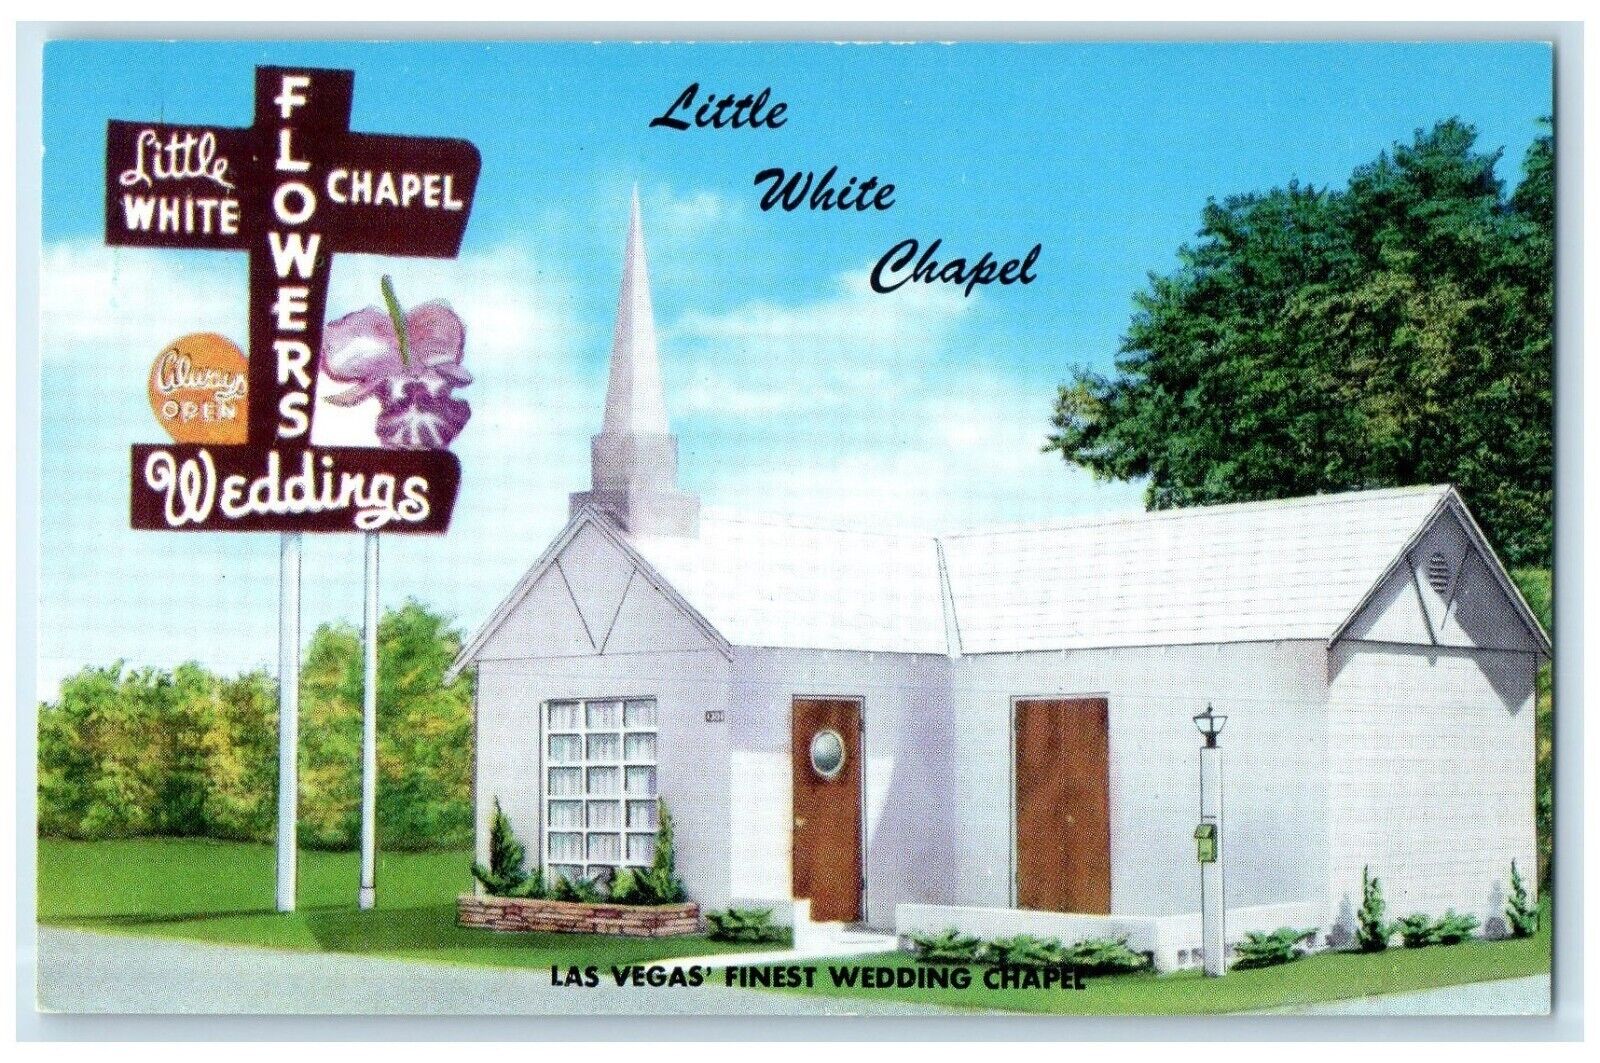 c1960 Little White Chapel Flowers Wedding Las Vegas Nevada NV Vintage Postcard